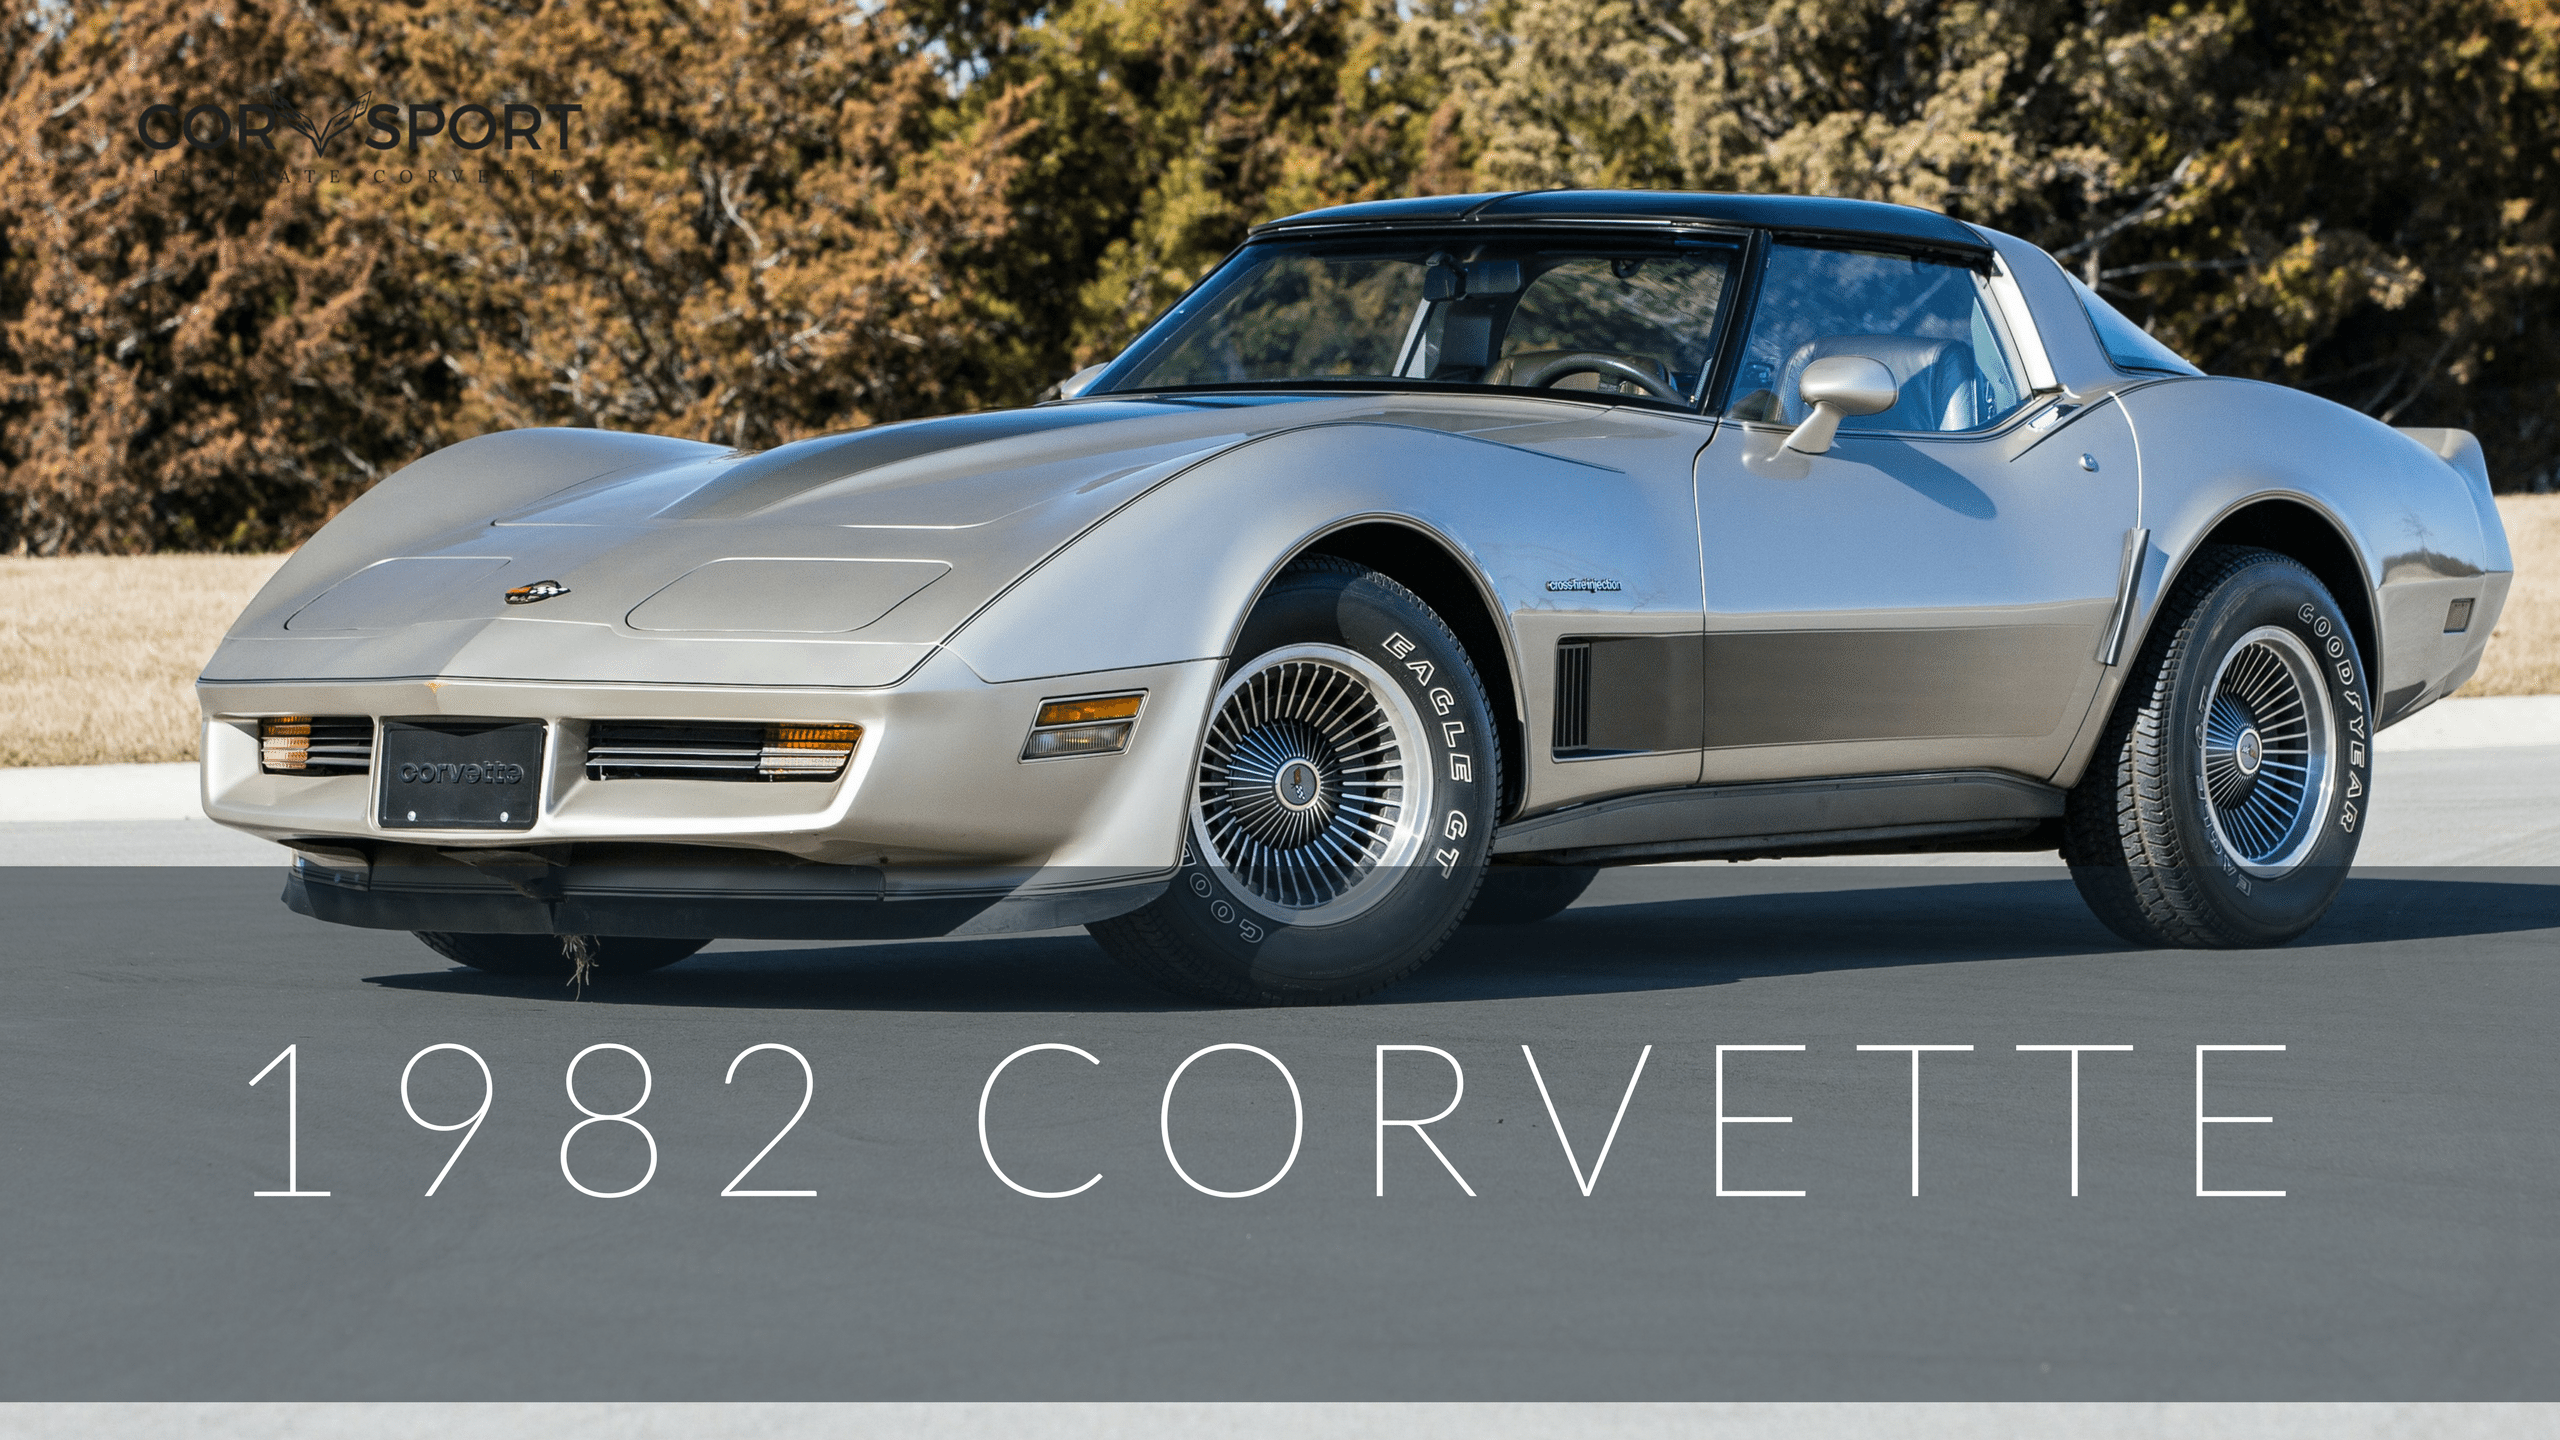 1978 corvette corvette owners manual download